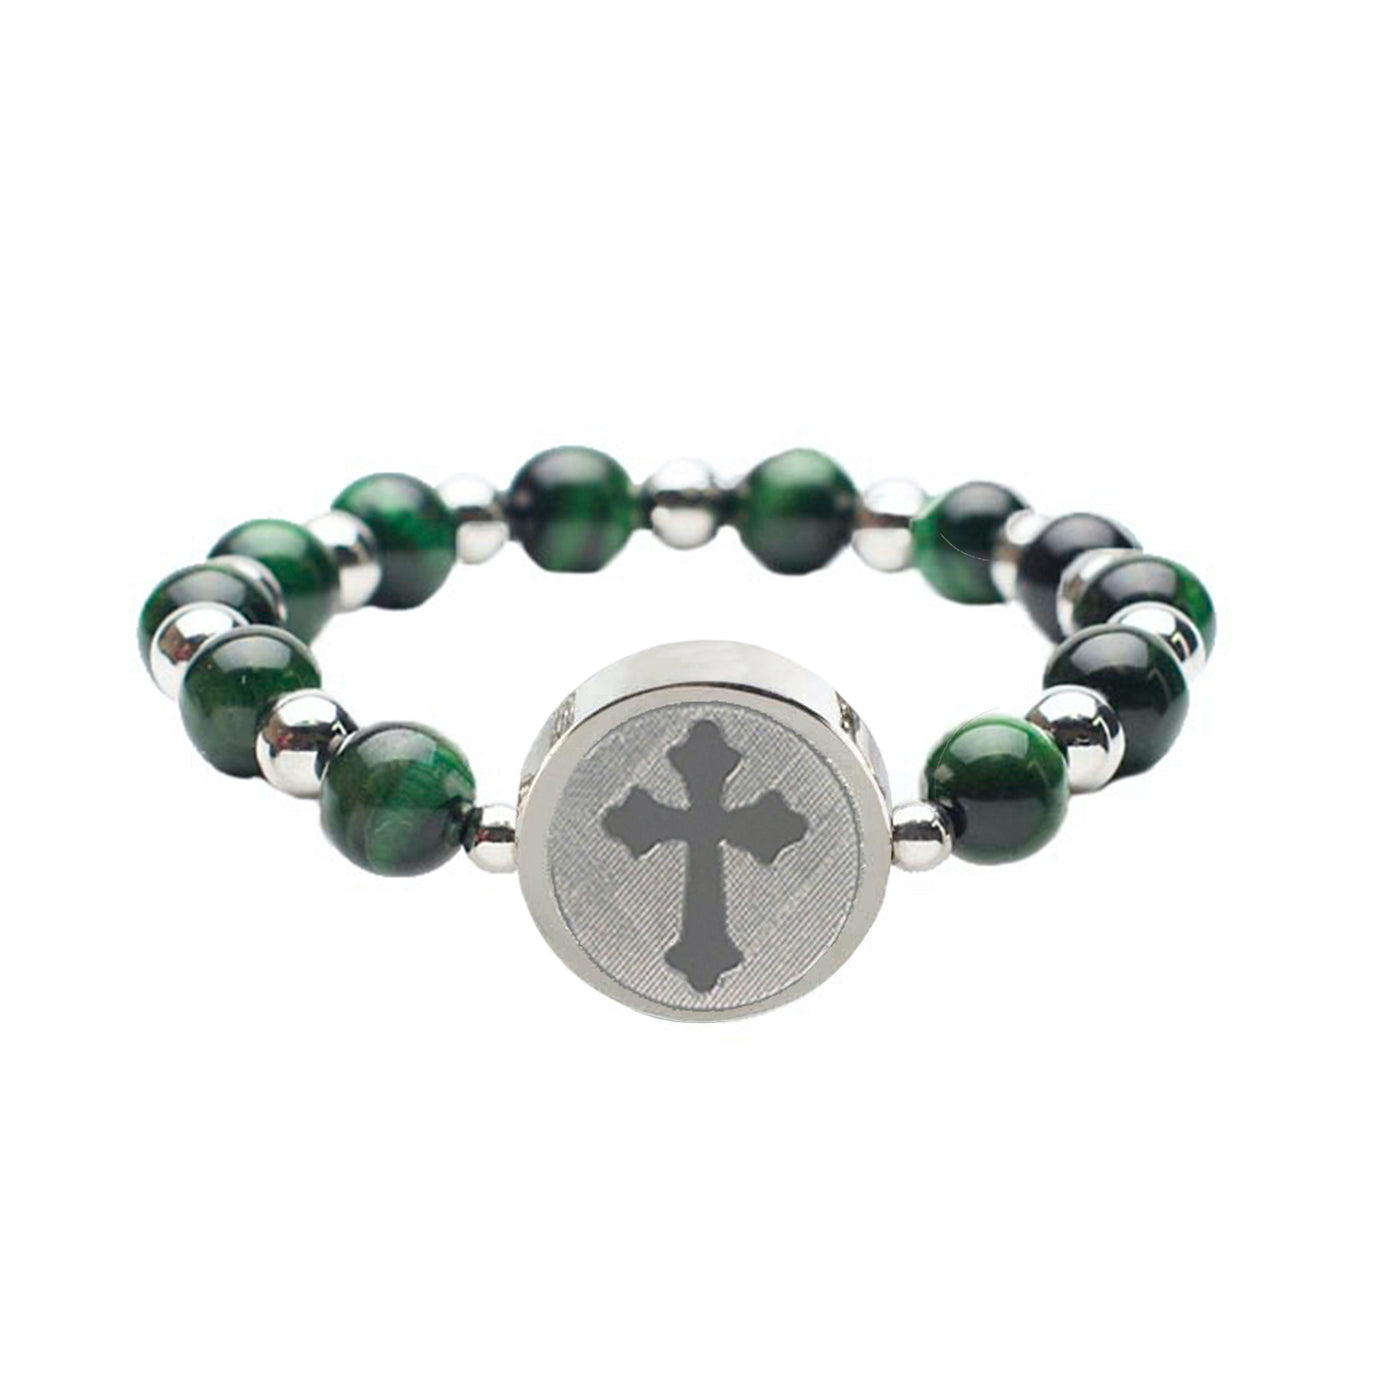 Brandi Coventry Cross Beaded Bracelet - Green Tigers Eye - Silver